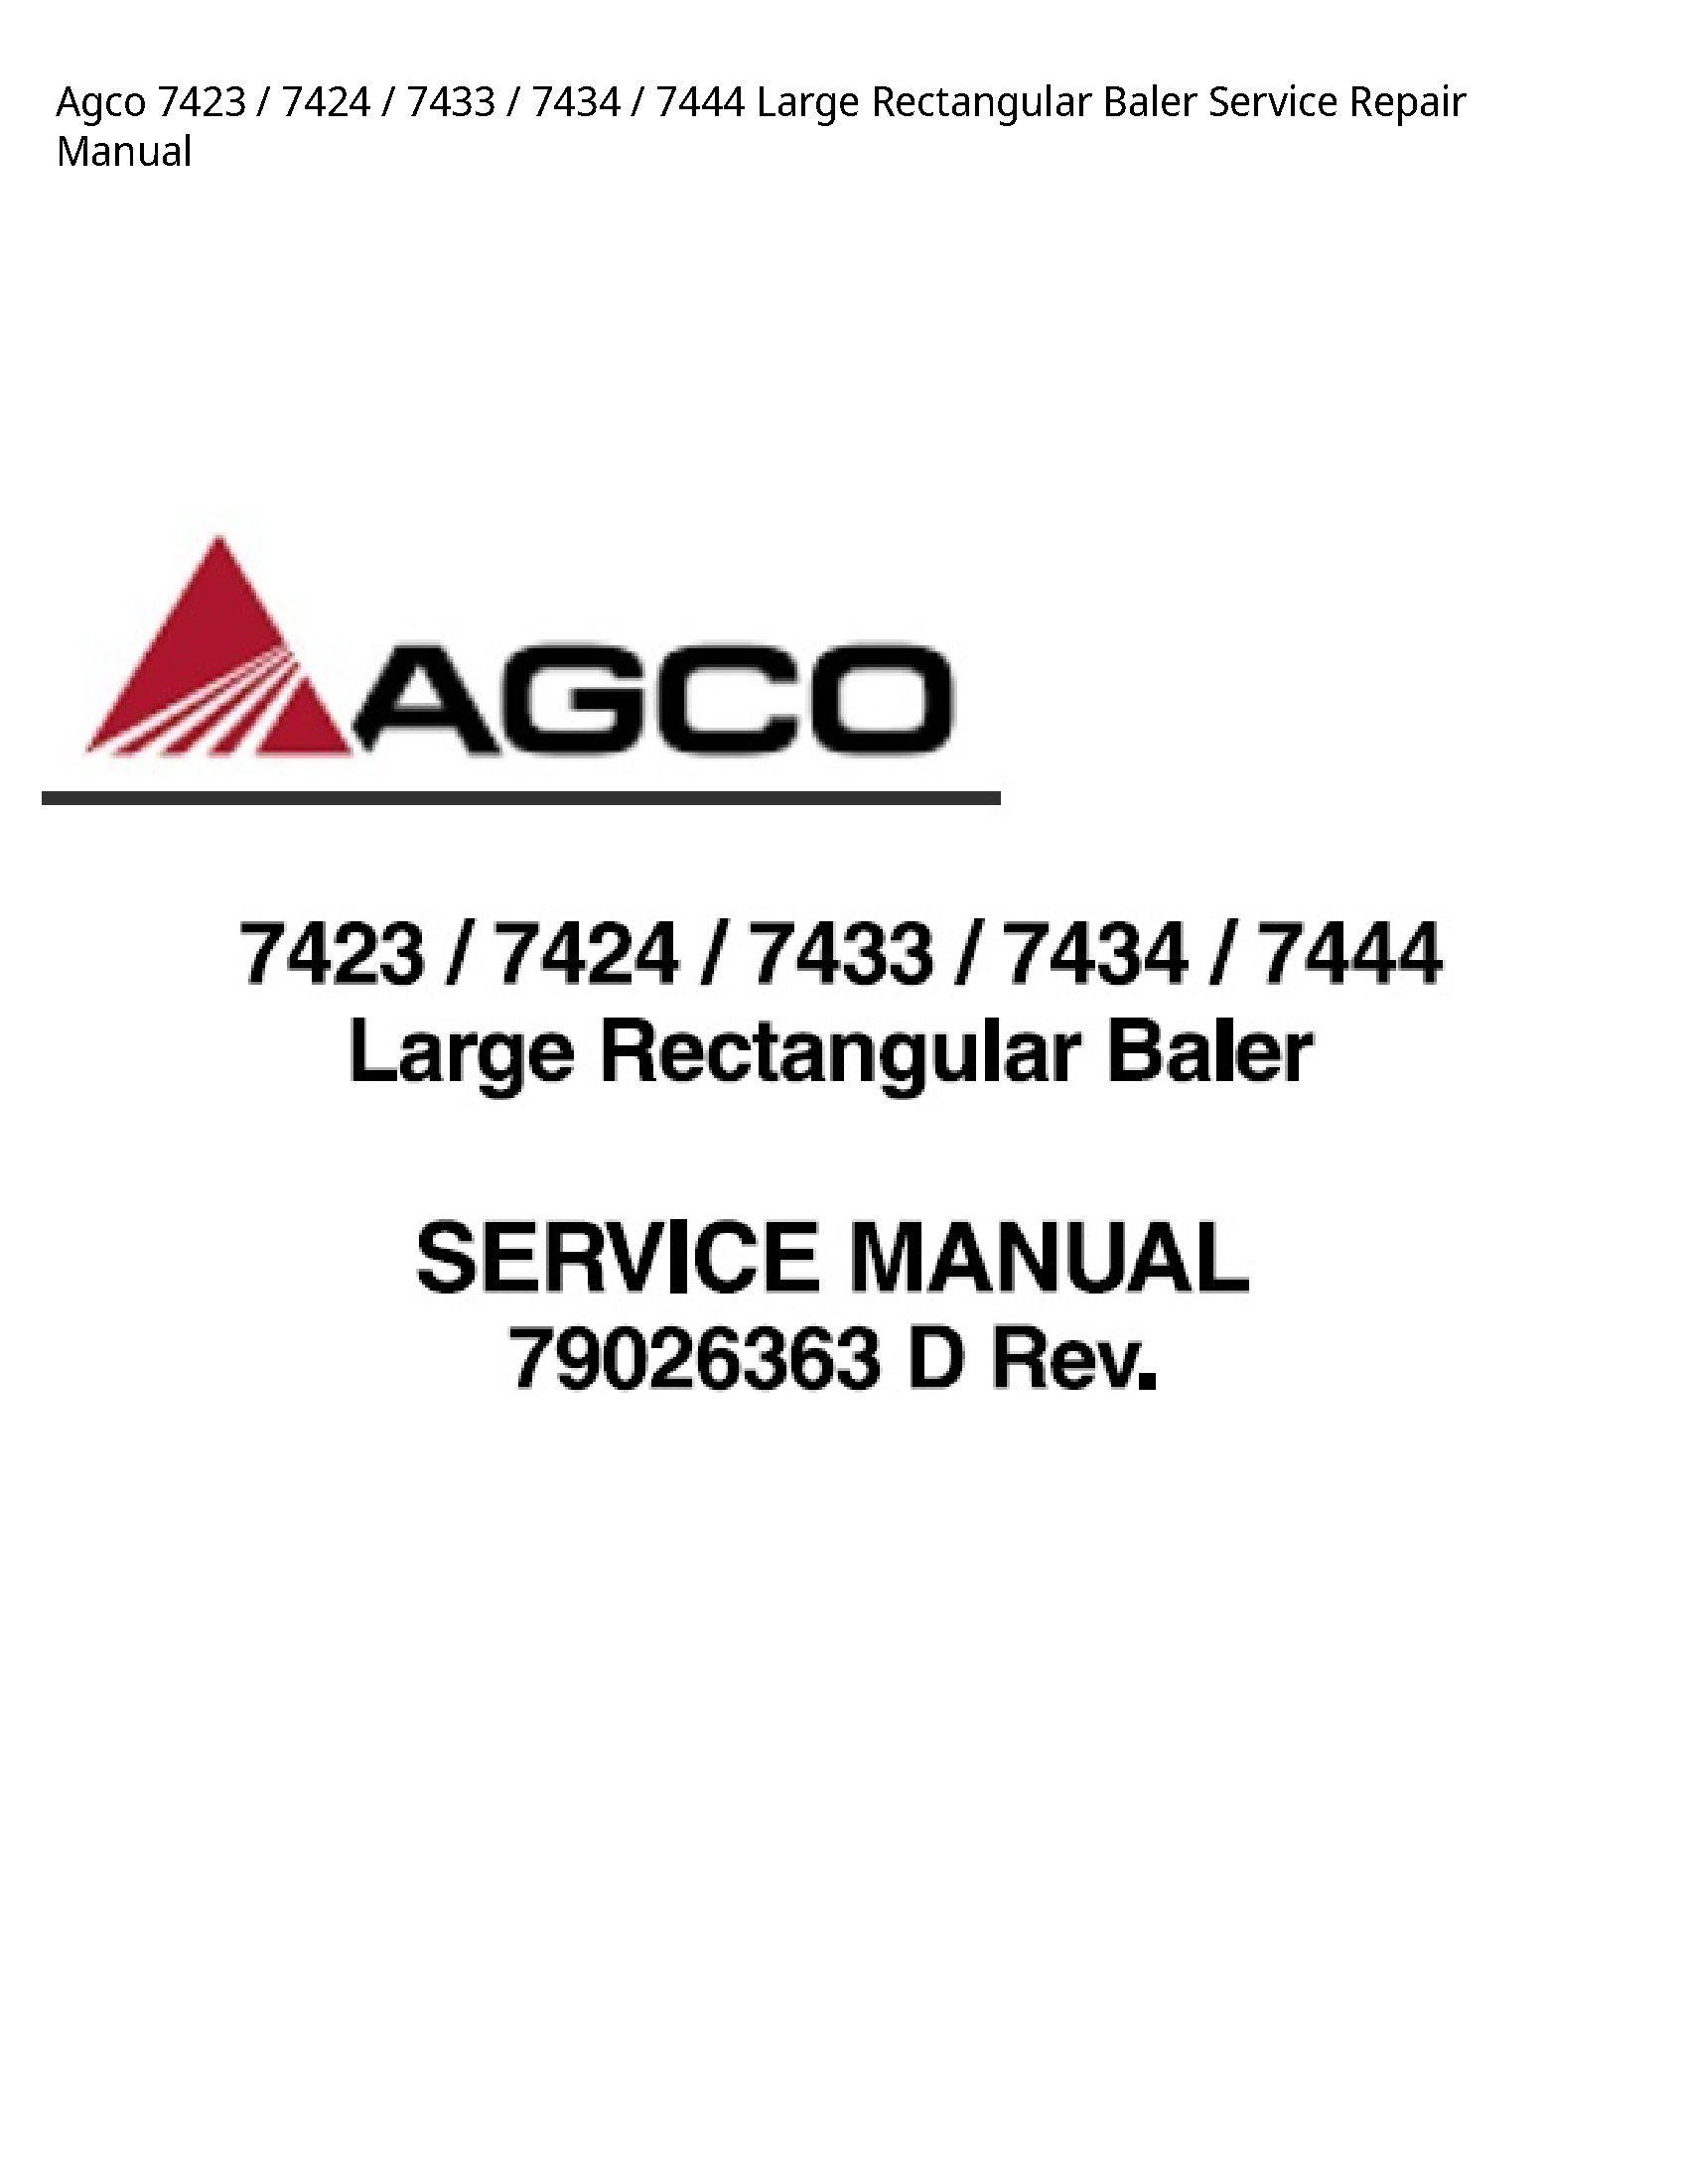 AGCO 7423 Large Rectangular Baler manual